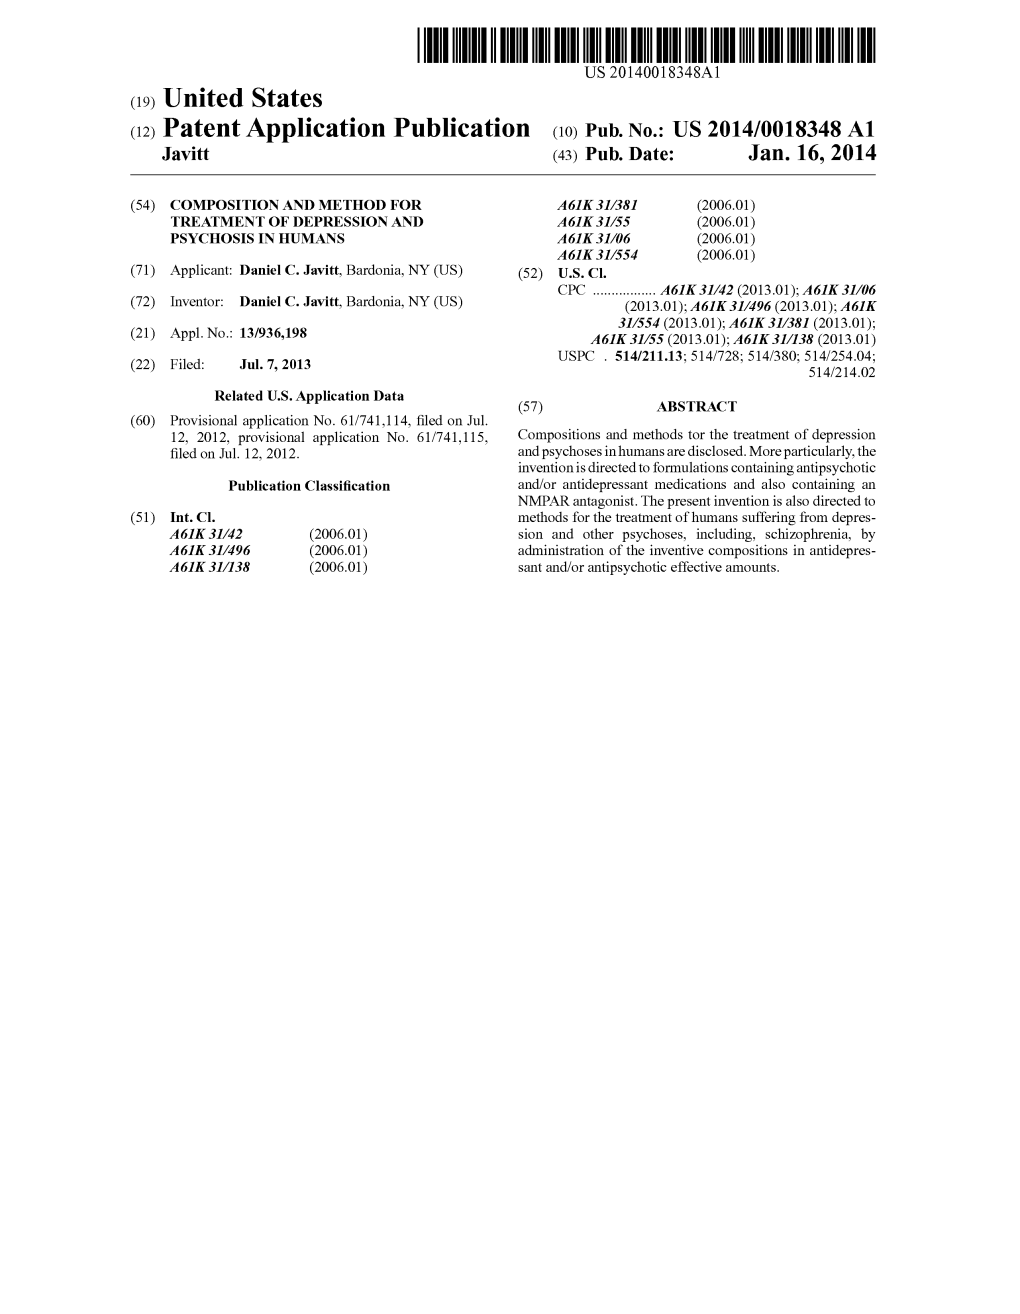 (12) Patent Application Publication (10) Pub. No.: US 2014/0018348 A1 Javitt (43) Pub